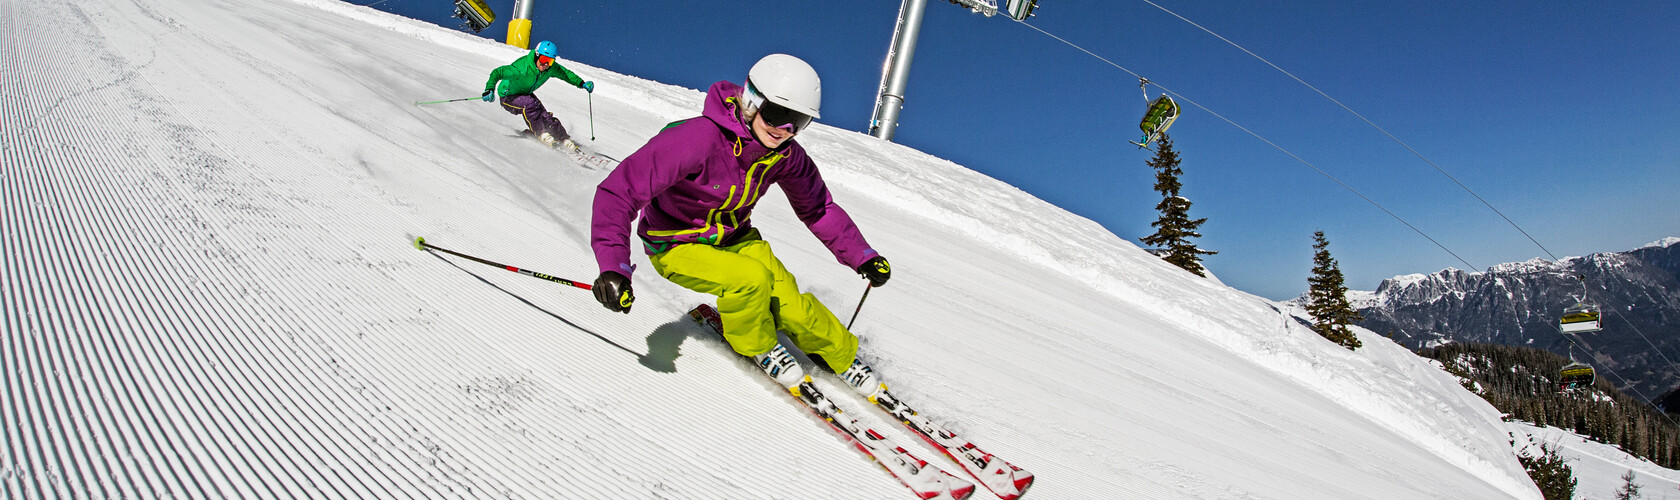 Skiing with the Ski amadé seasonal ticket - Planai & Hochwurzen | © Gregor Hartl